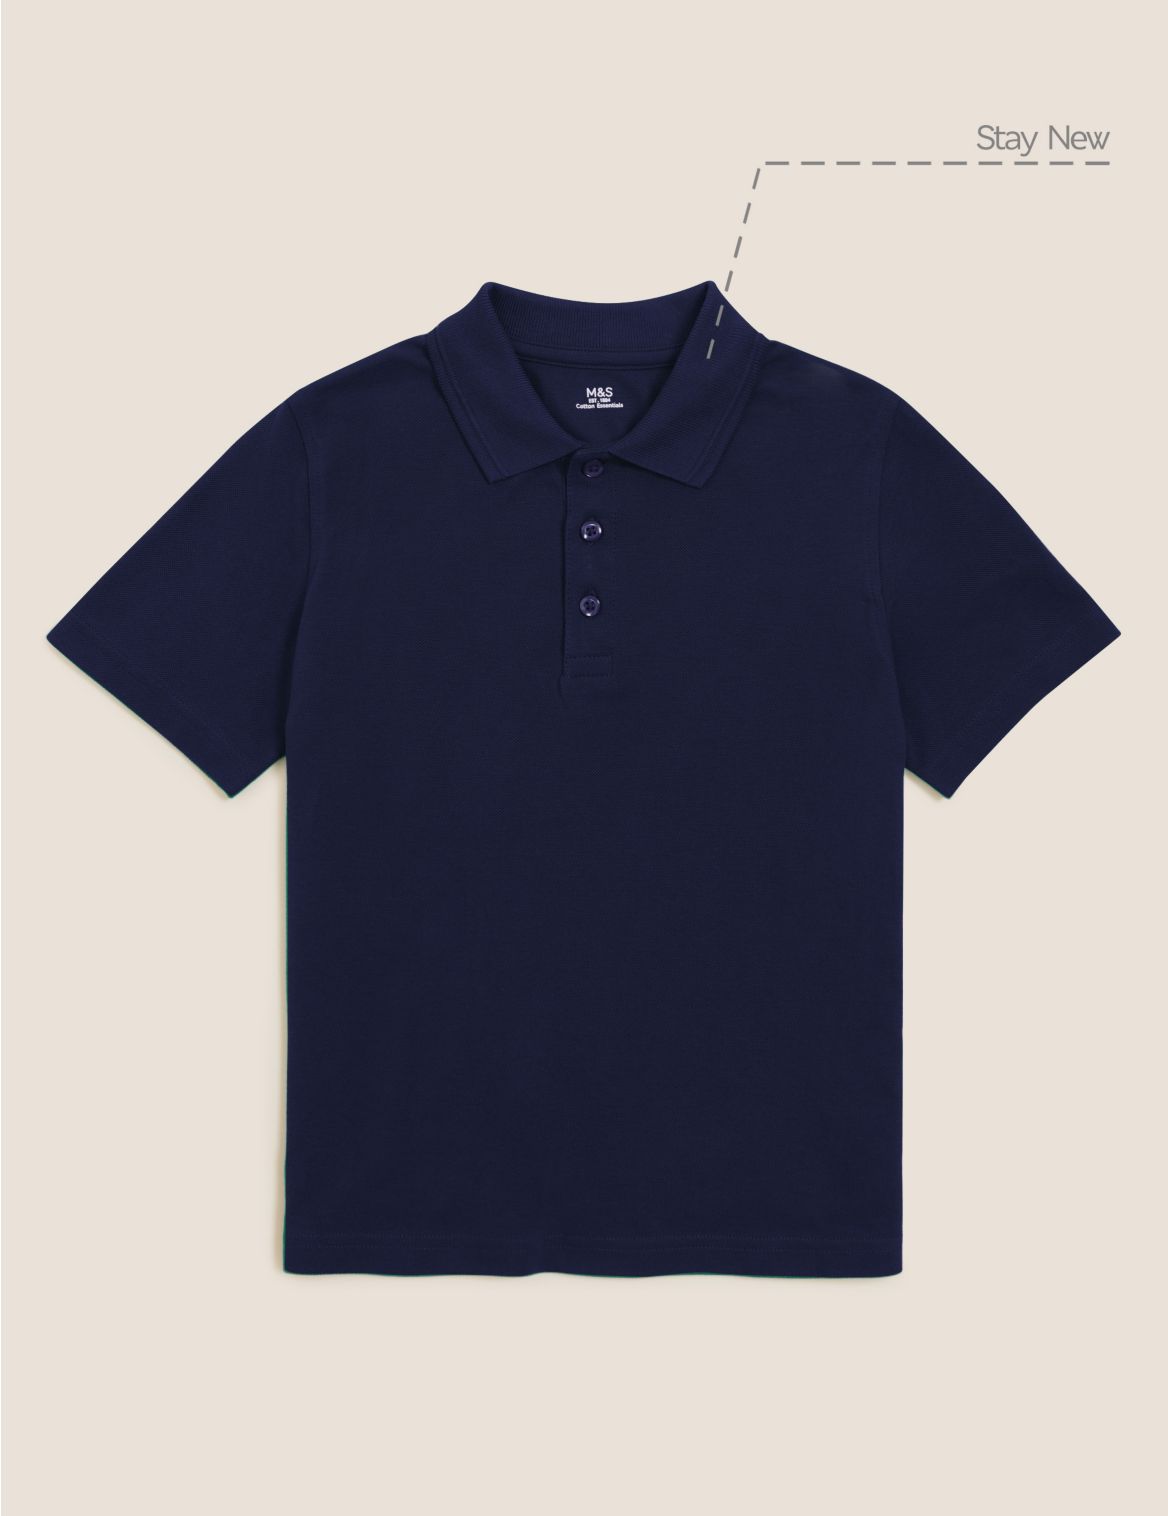 Unisex Pure Cotton Polo Shirt navy